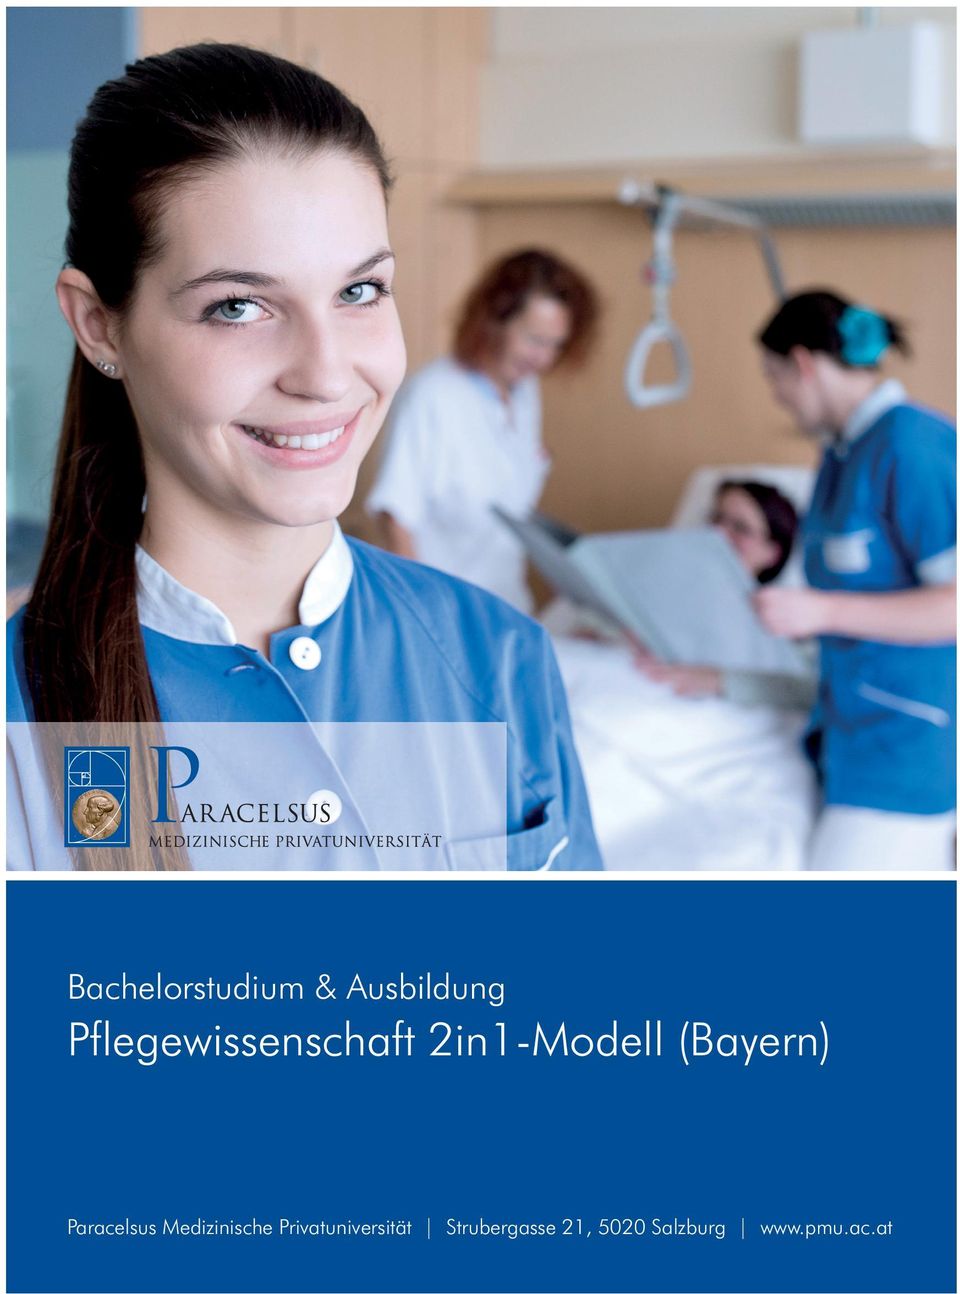 (Bayern) Paracelsus Medizinische